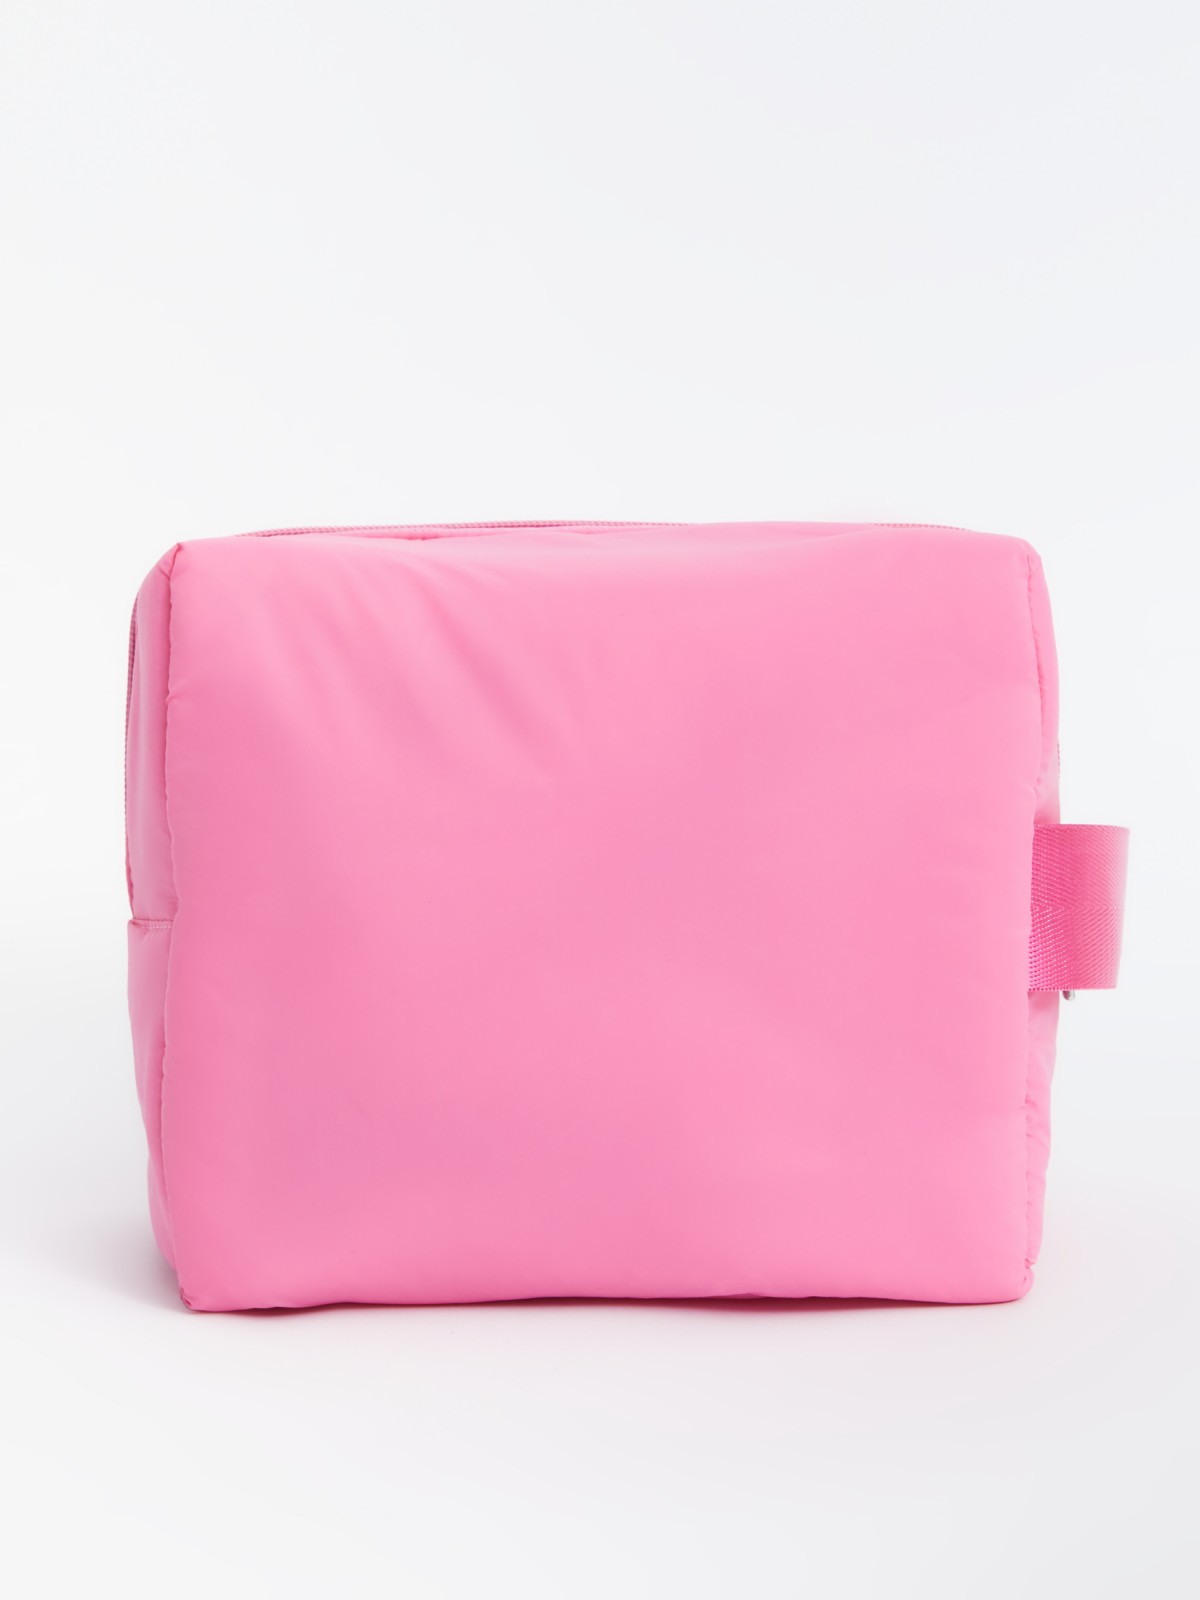 Мягкая тканевая косметичка zolla 22331948L215, цвет розовый, размер No_size - фото 5